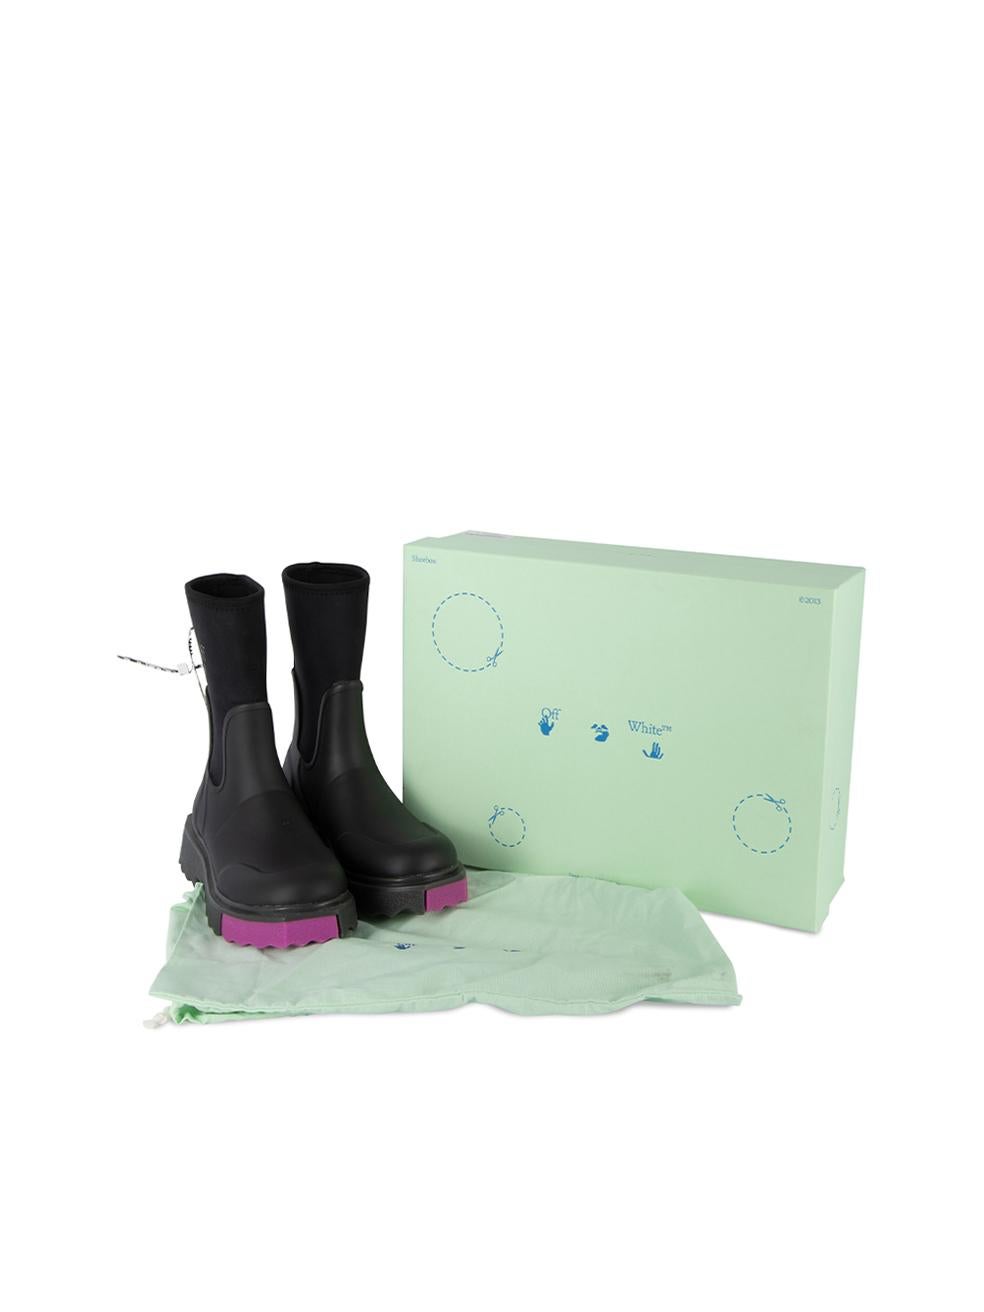 Off-White Women's Black Sponge Rain Boots 2